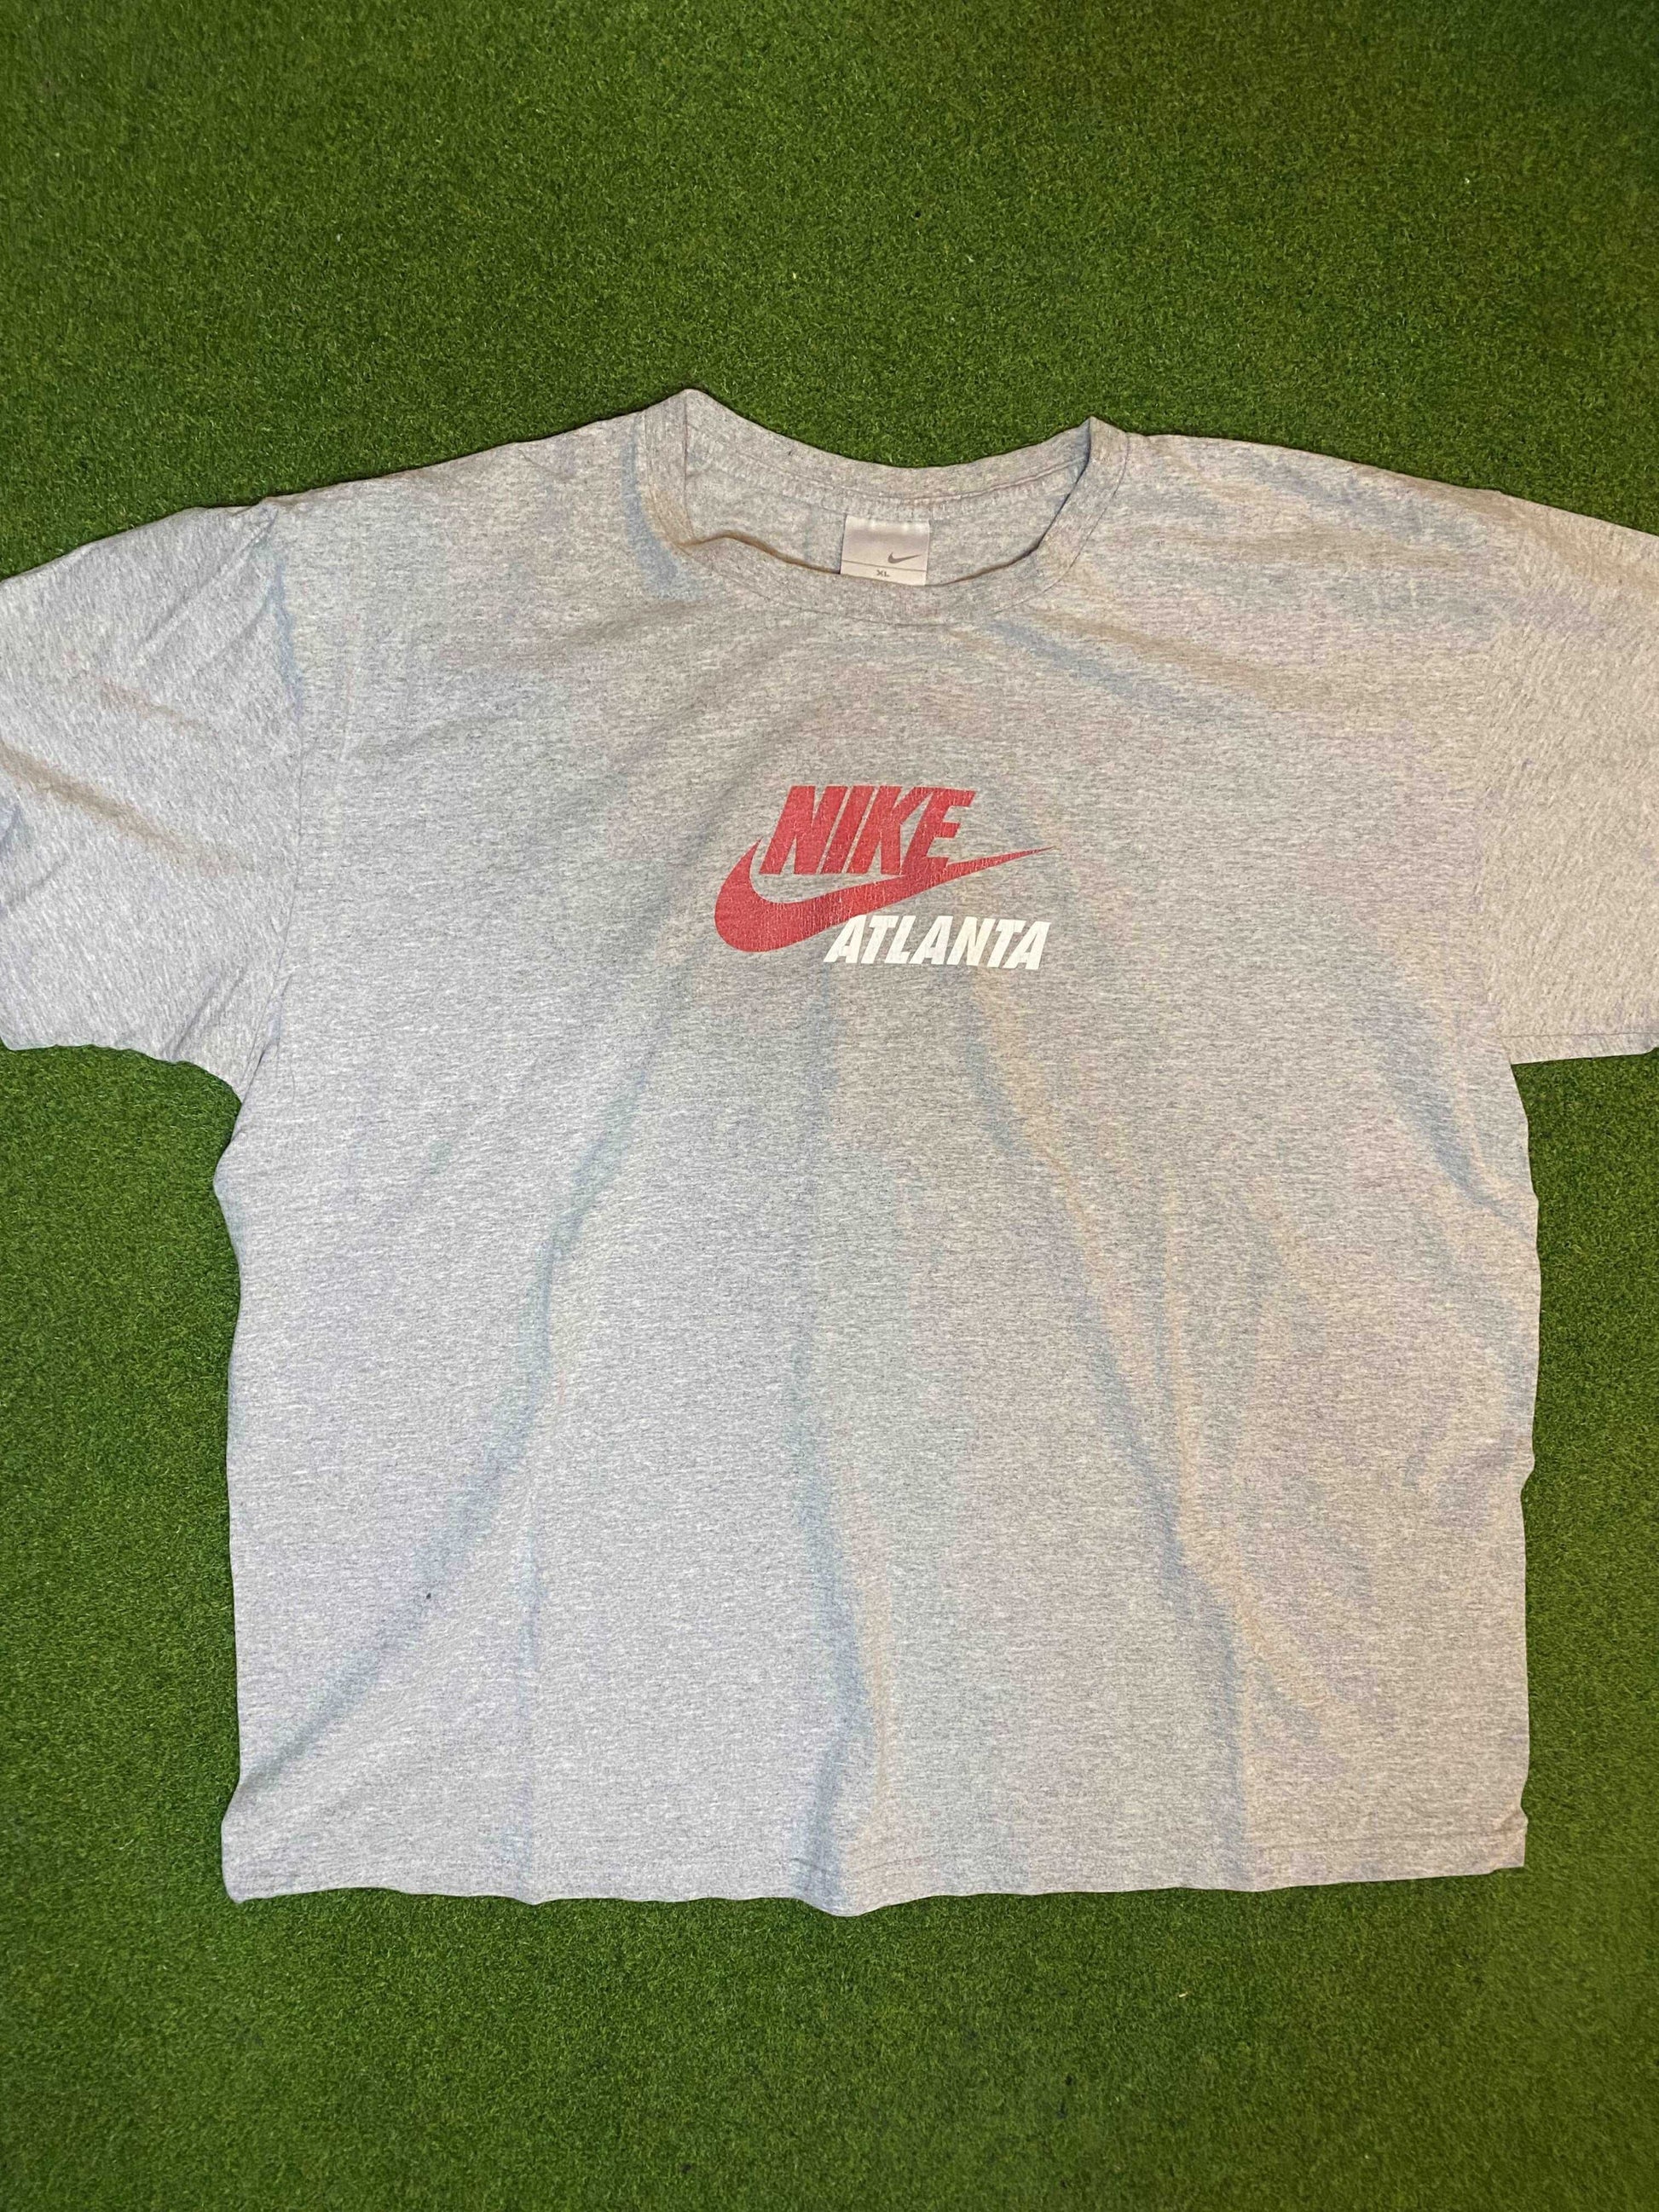 00s Nike Atlanta - Vintage Nike Tee Shirt (XL)